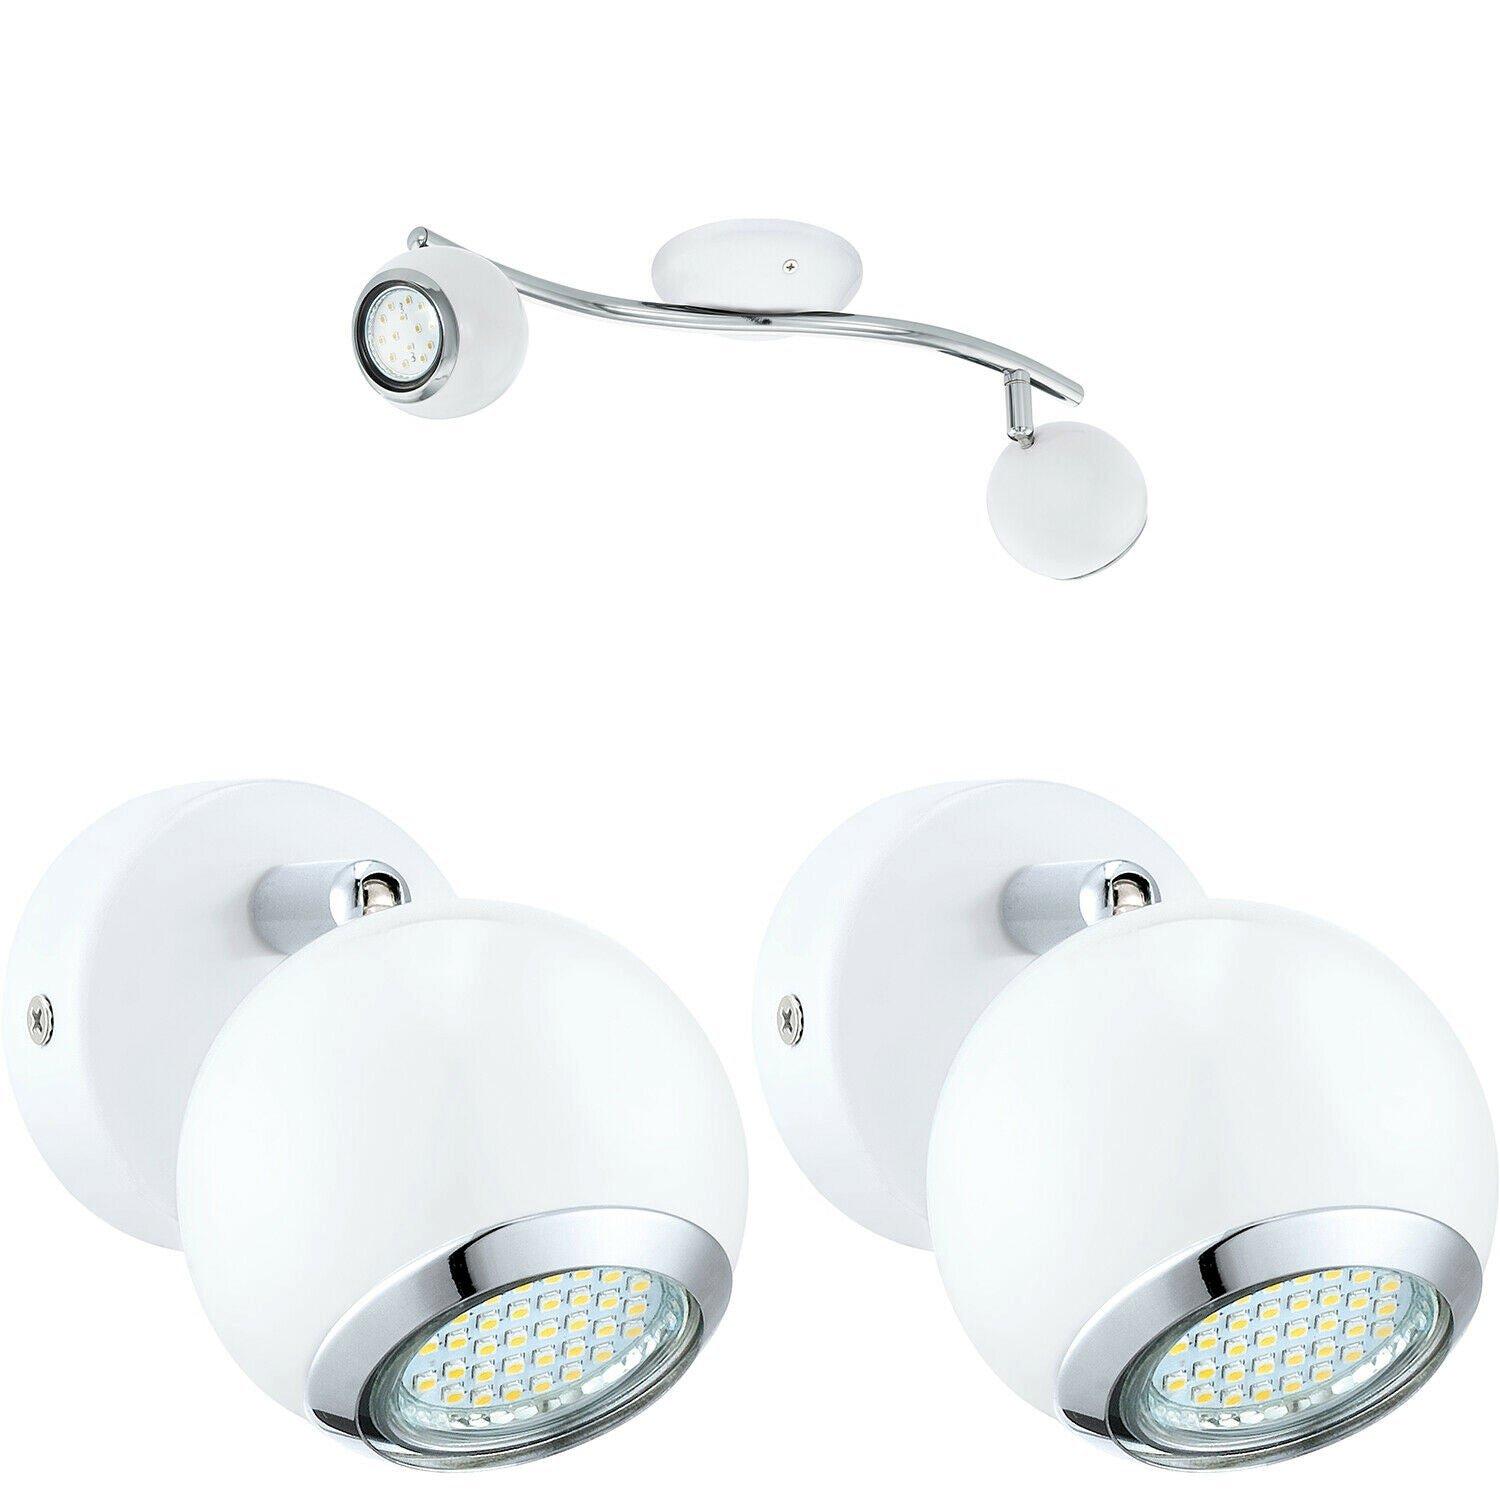 Twin Ceiling Spot Light & 2x Matching Wall Lights White & Chrome Adjustable Head